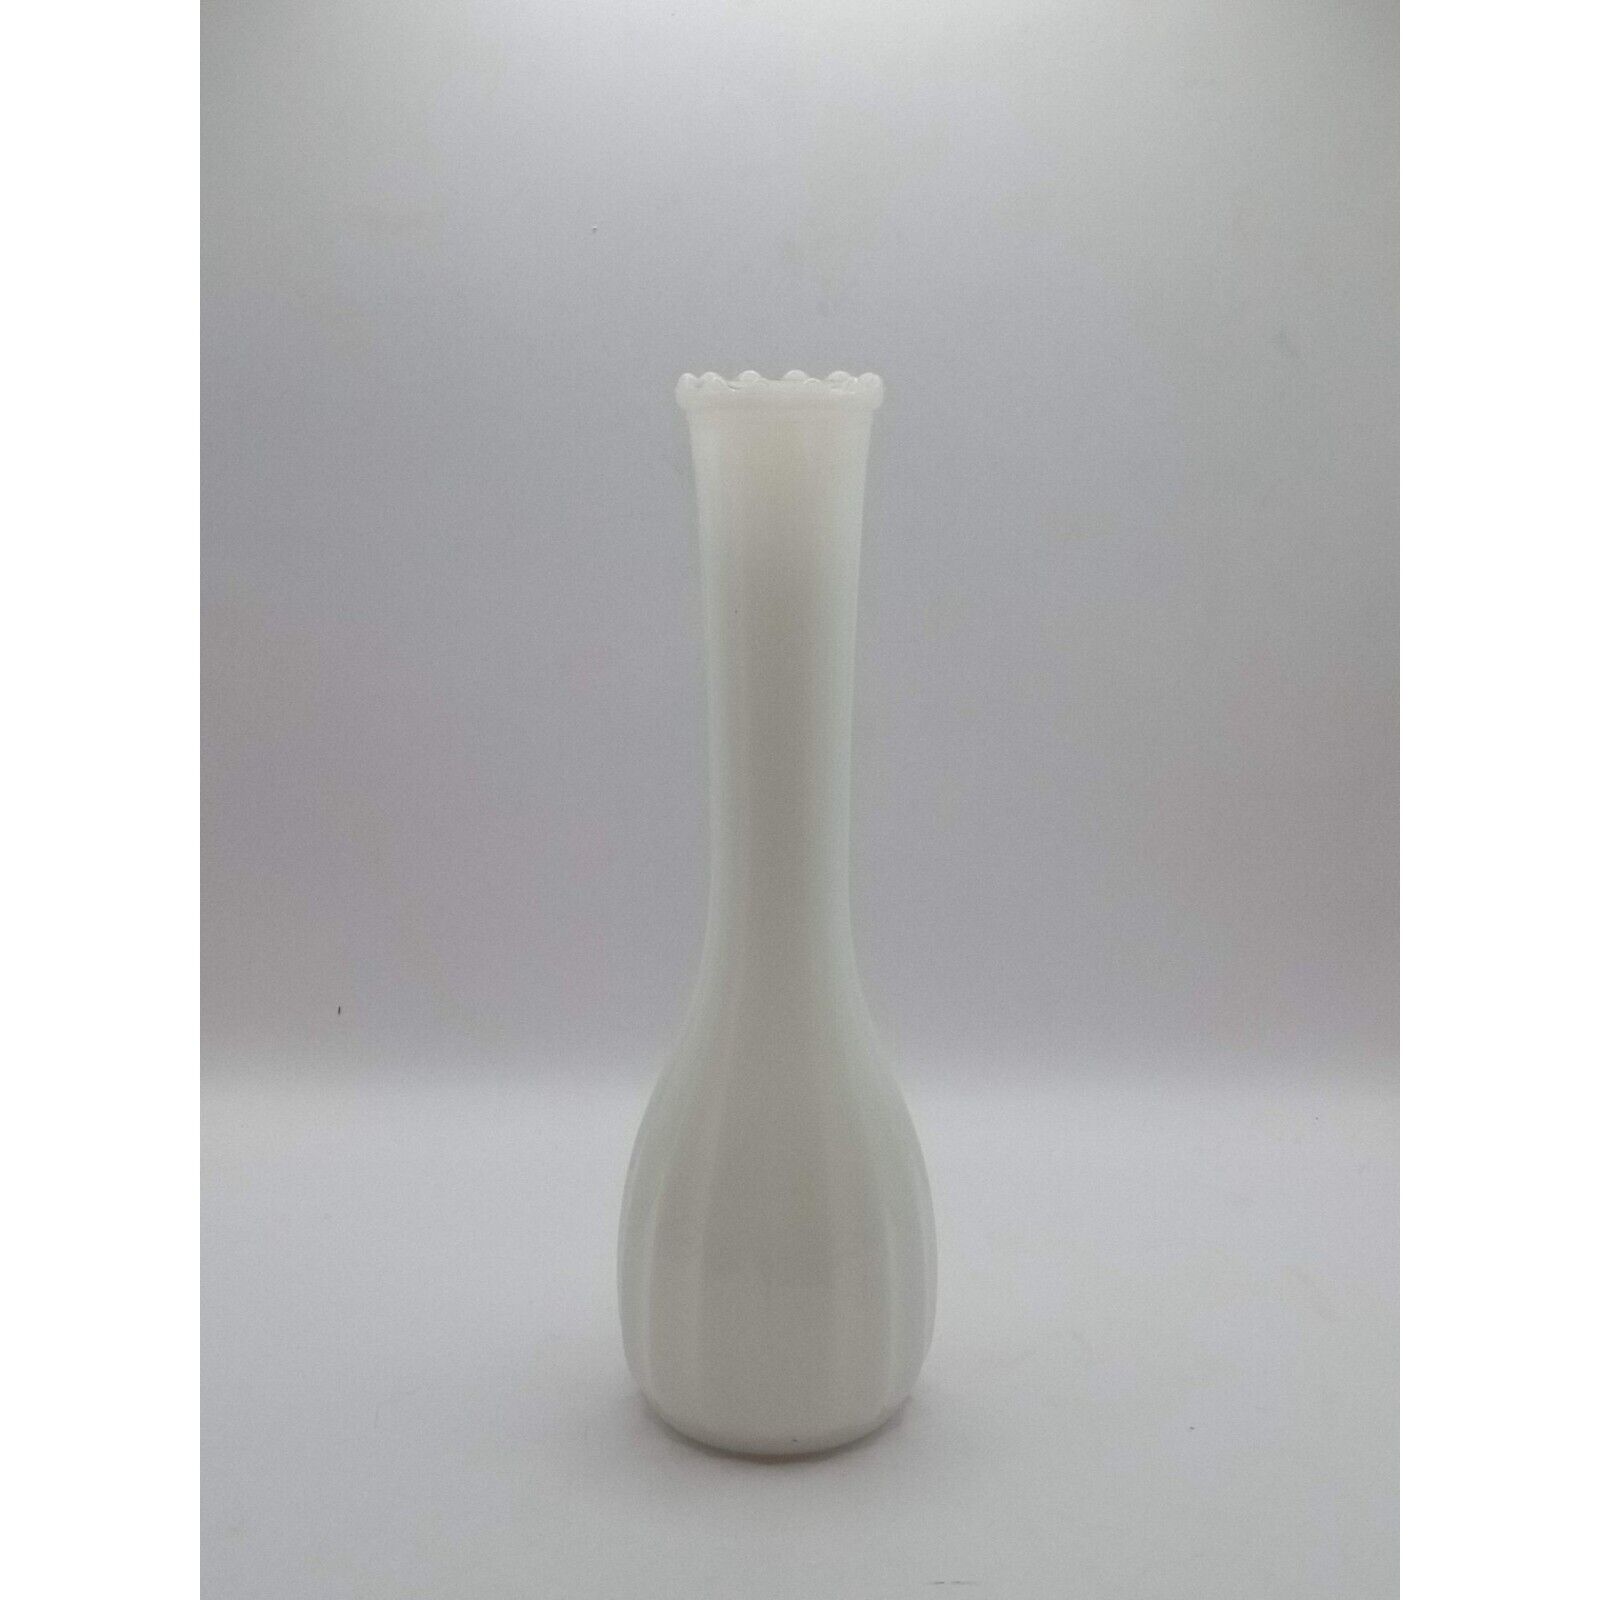 VTG 1960s Anchor Hocking Milk Glass Bud Vase Opaque White Scalloped Top